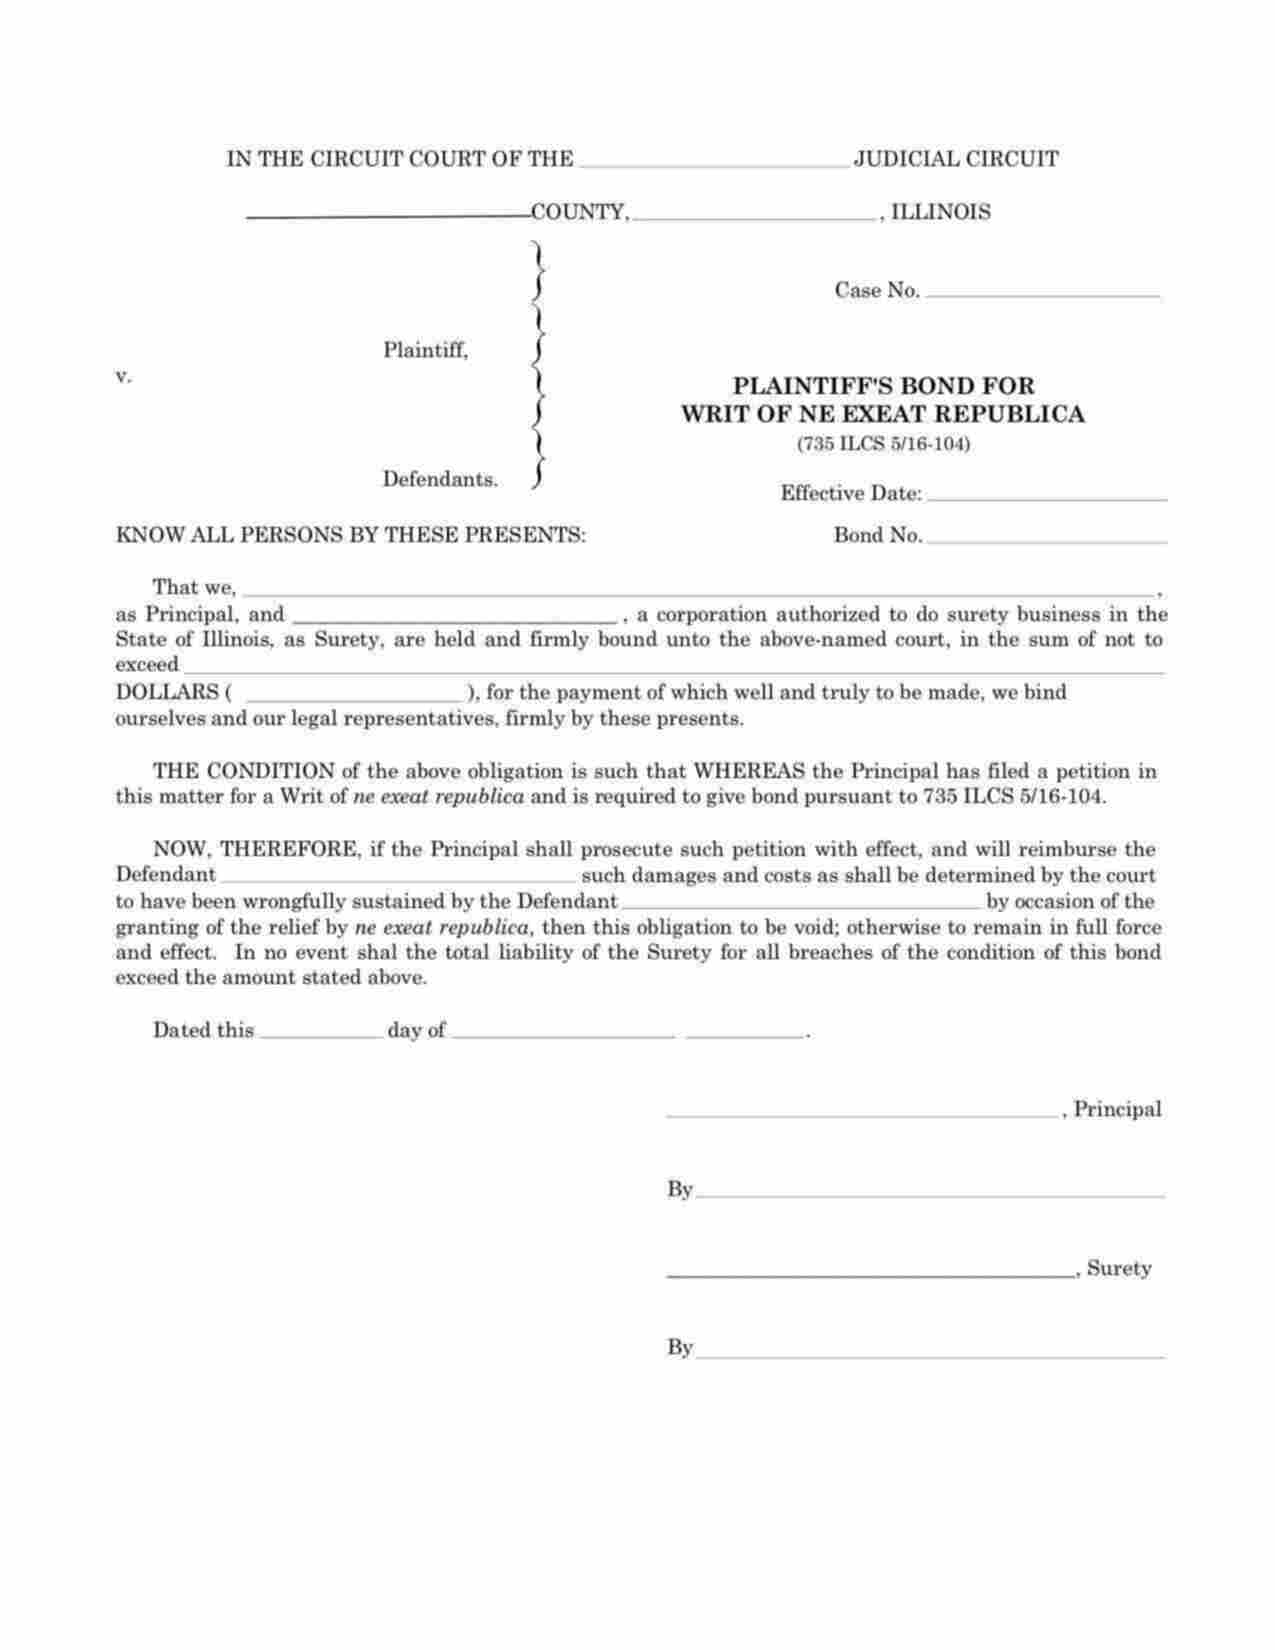 Illinois Plaintiffs Writ of NE Exeat Republica Bond Form